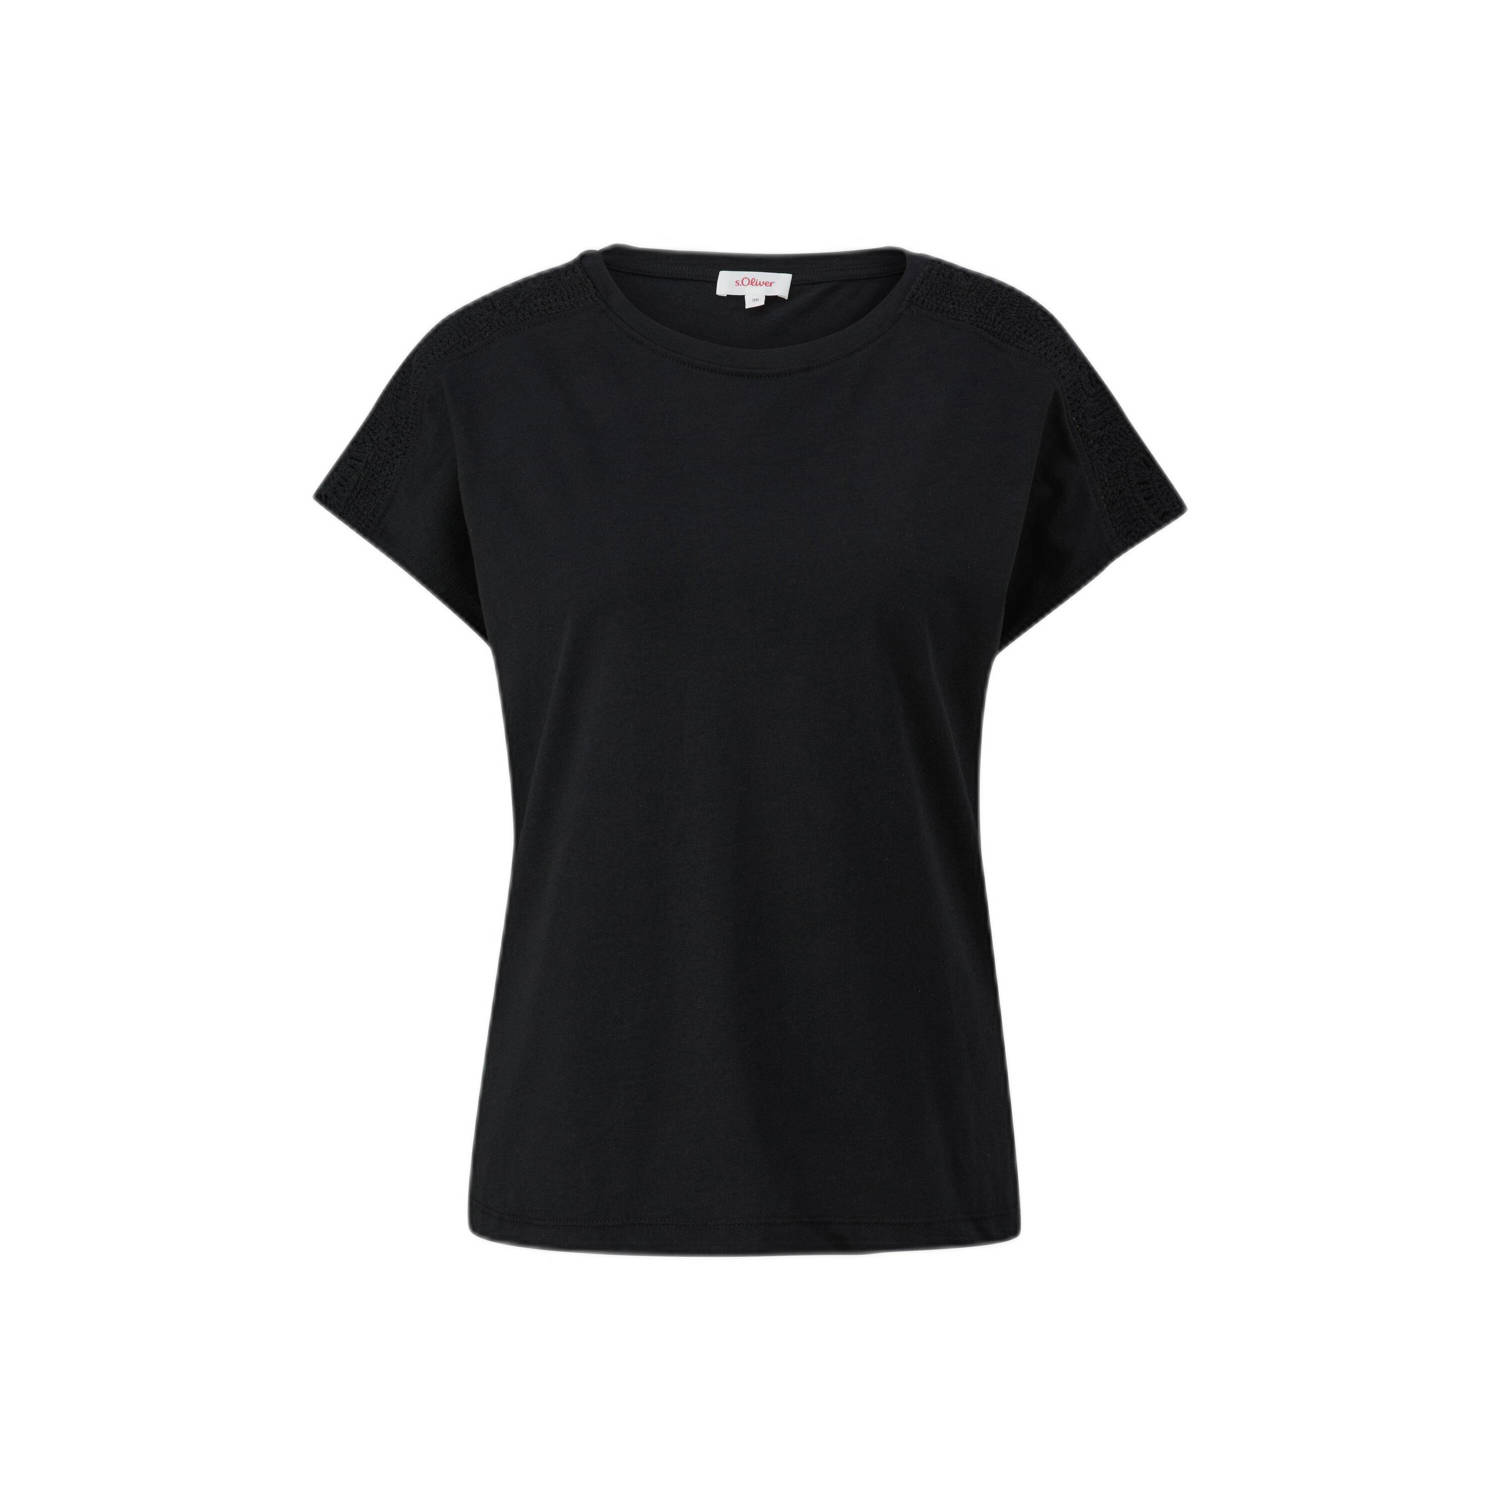 s.Oliver T-shirt zwart